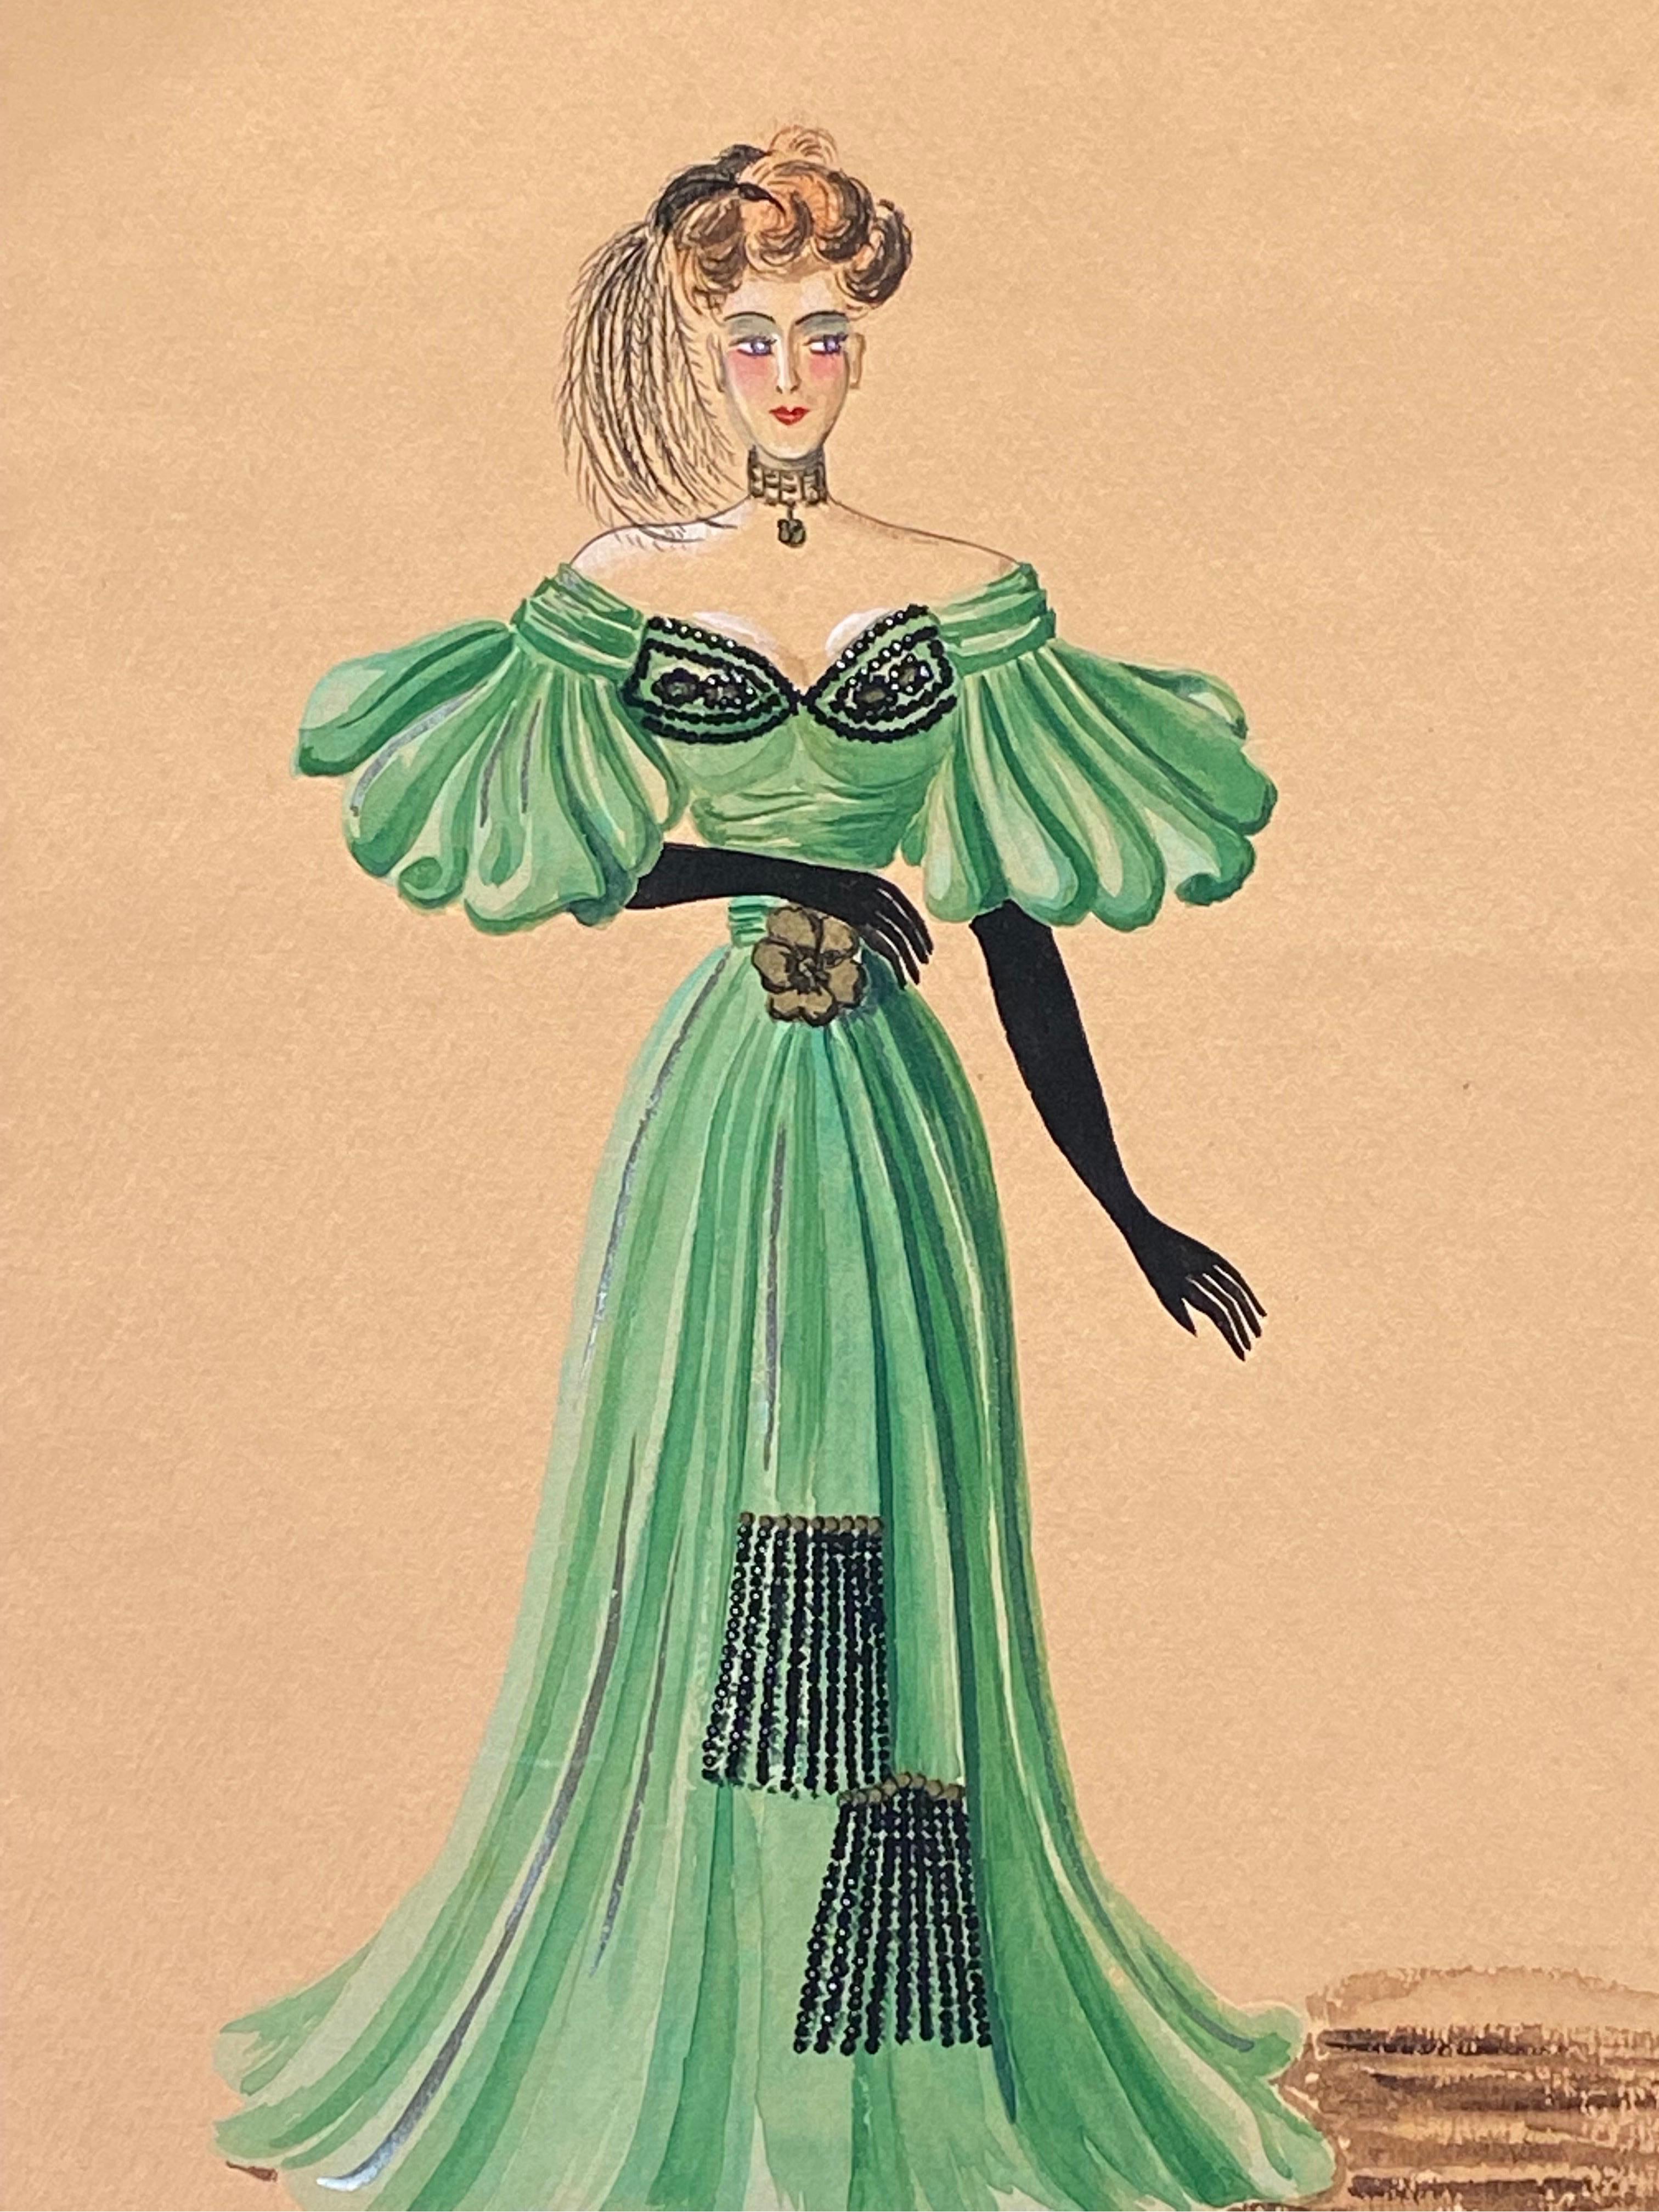 1940's Fashion Illustration - Lady In Dashing Green Ball Dress - Painting by Geneviève Thomas